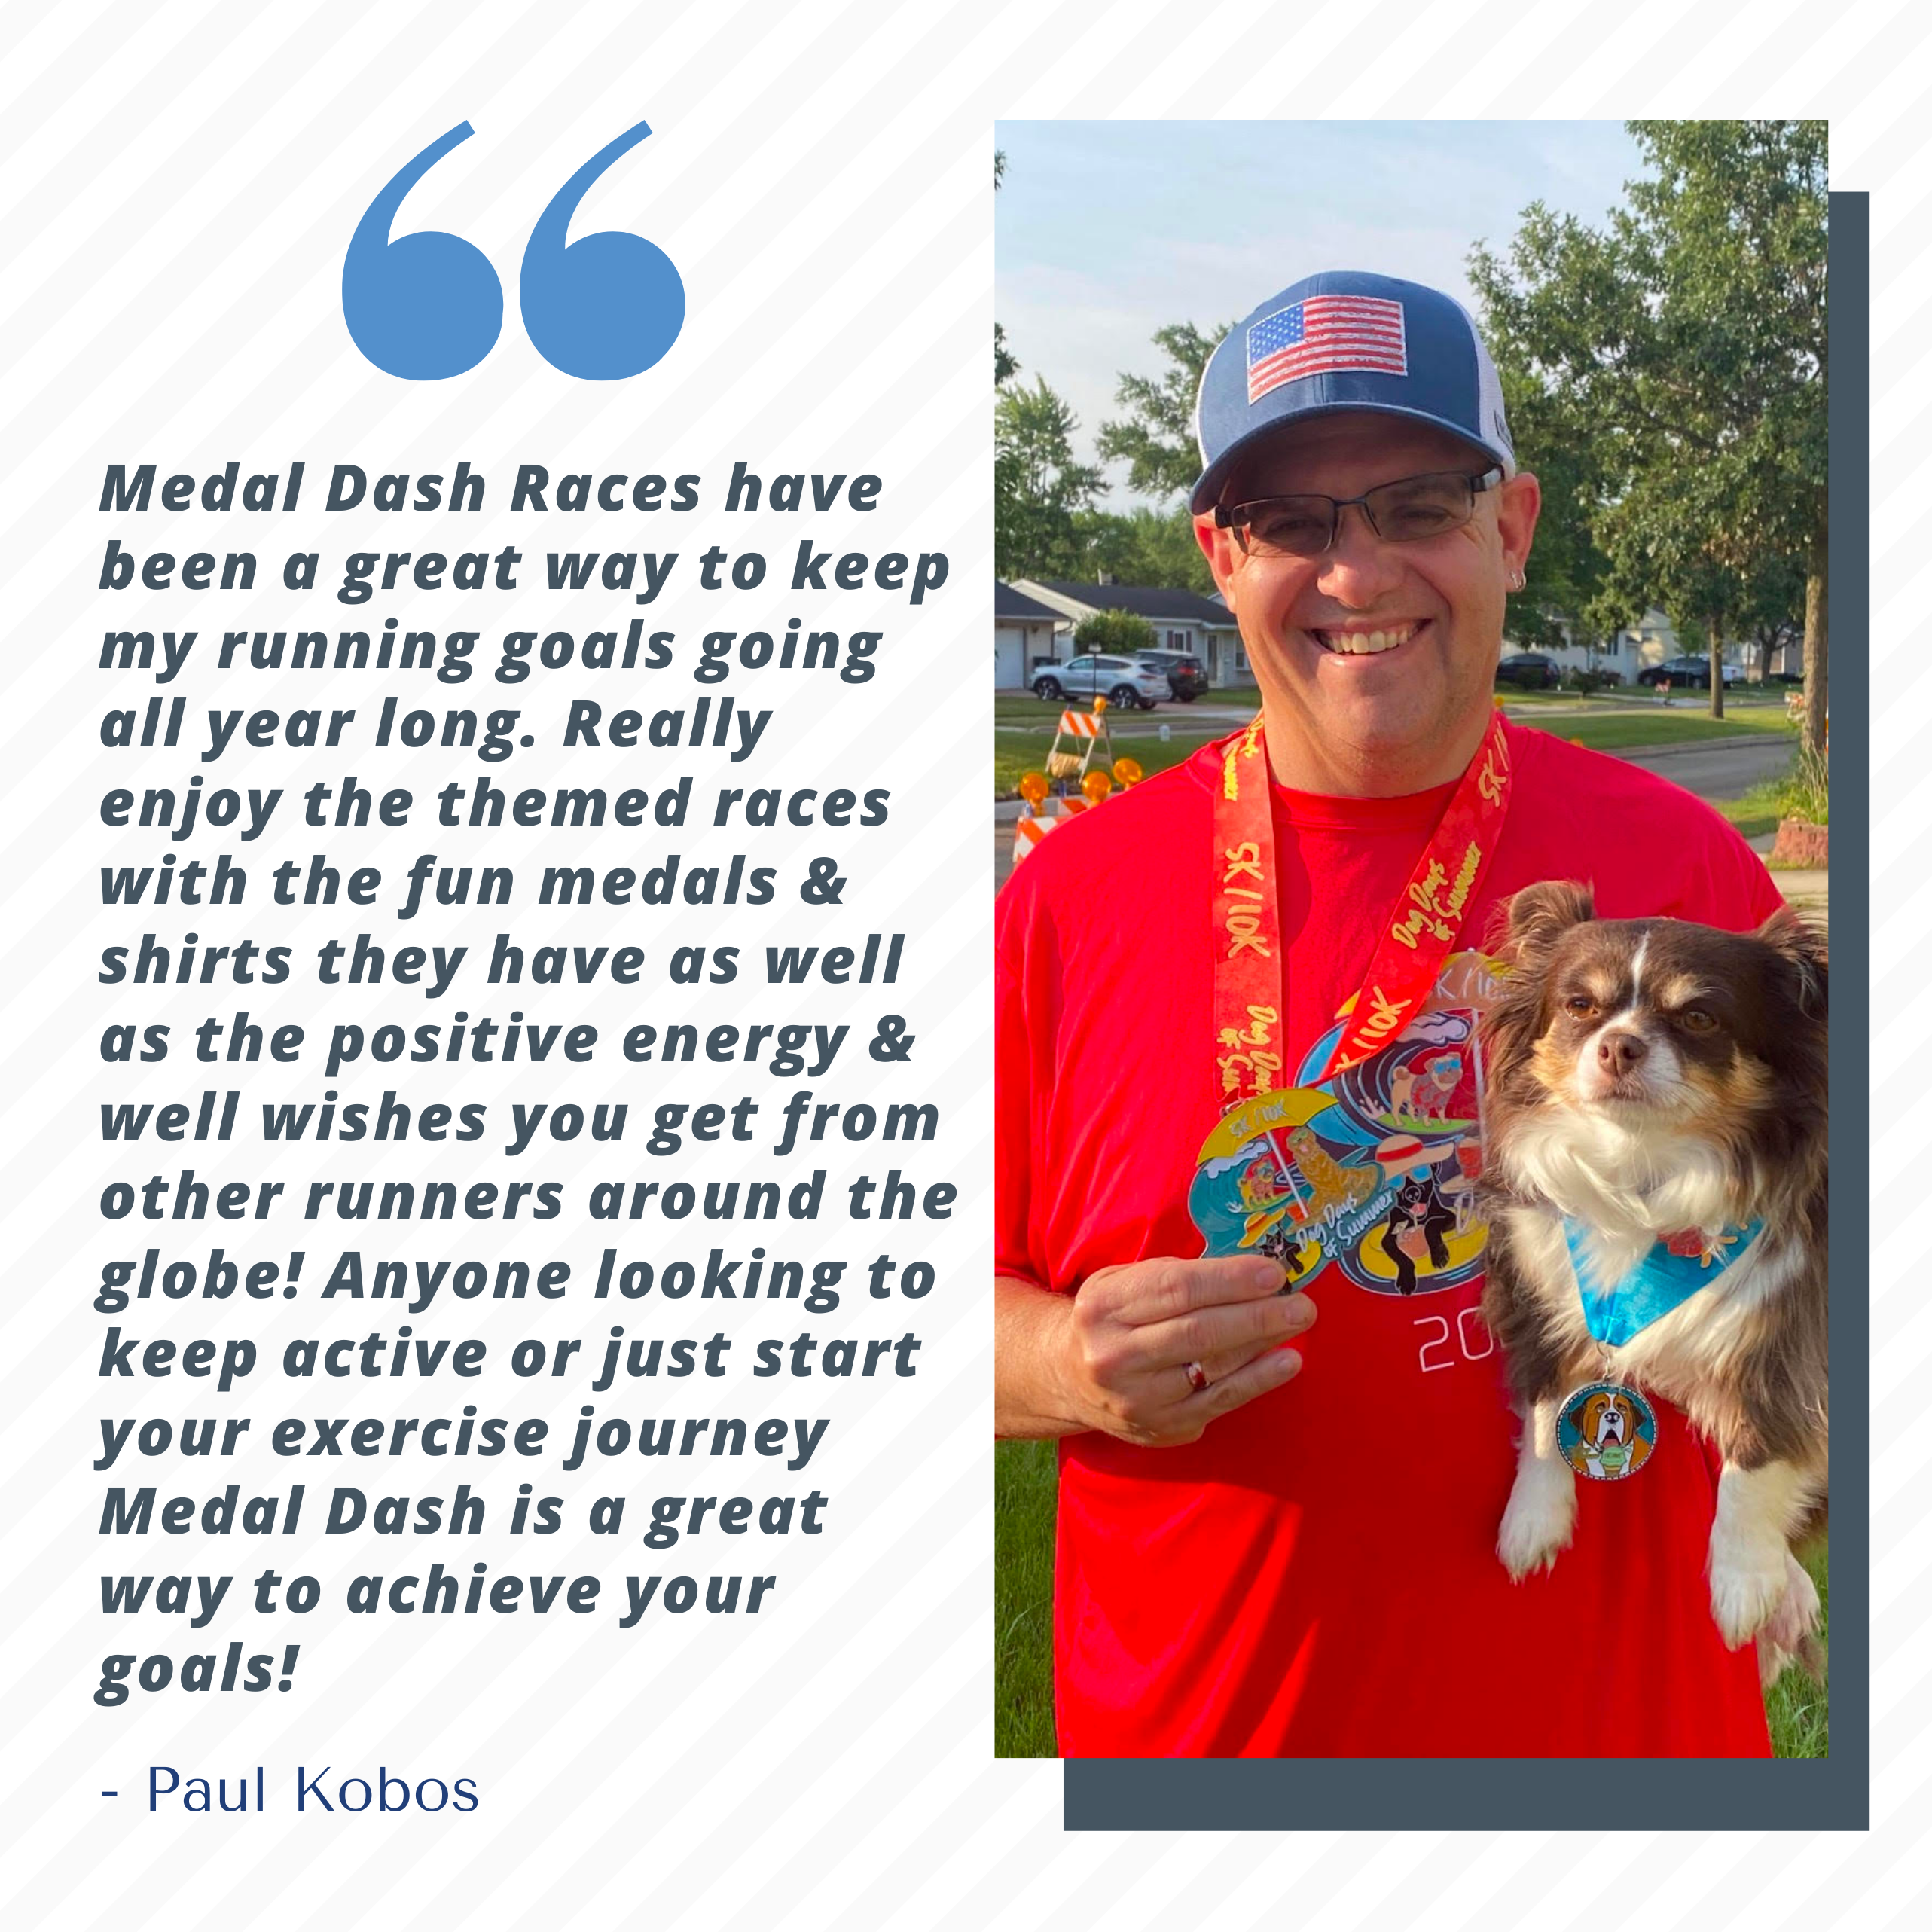 medal dash customer experience - paul k.